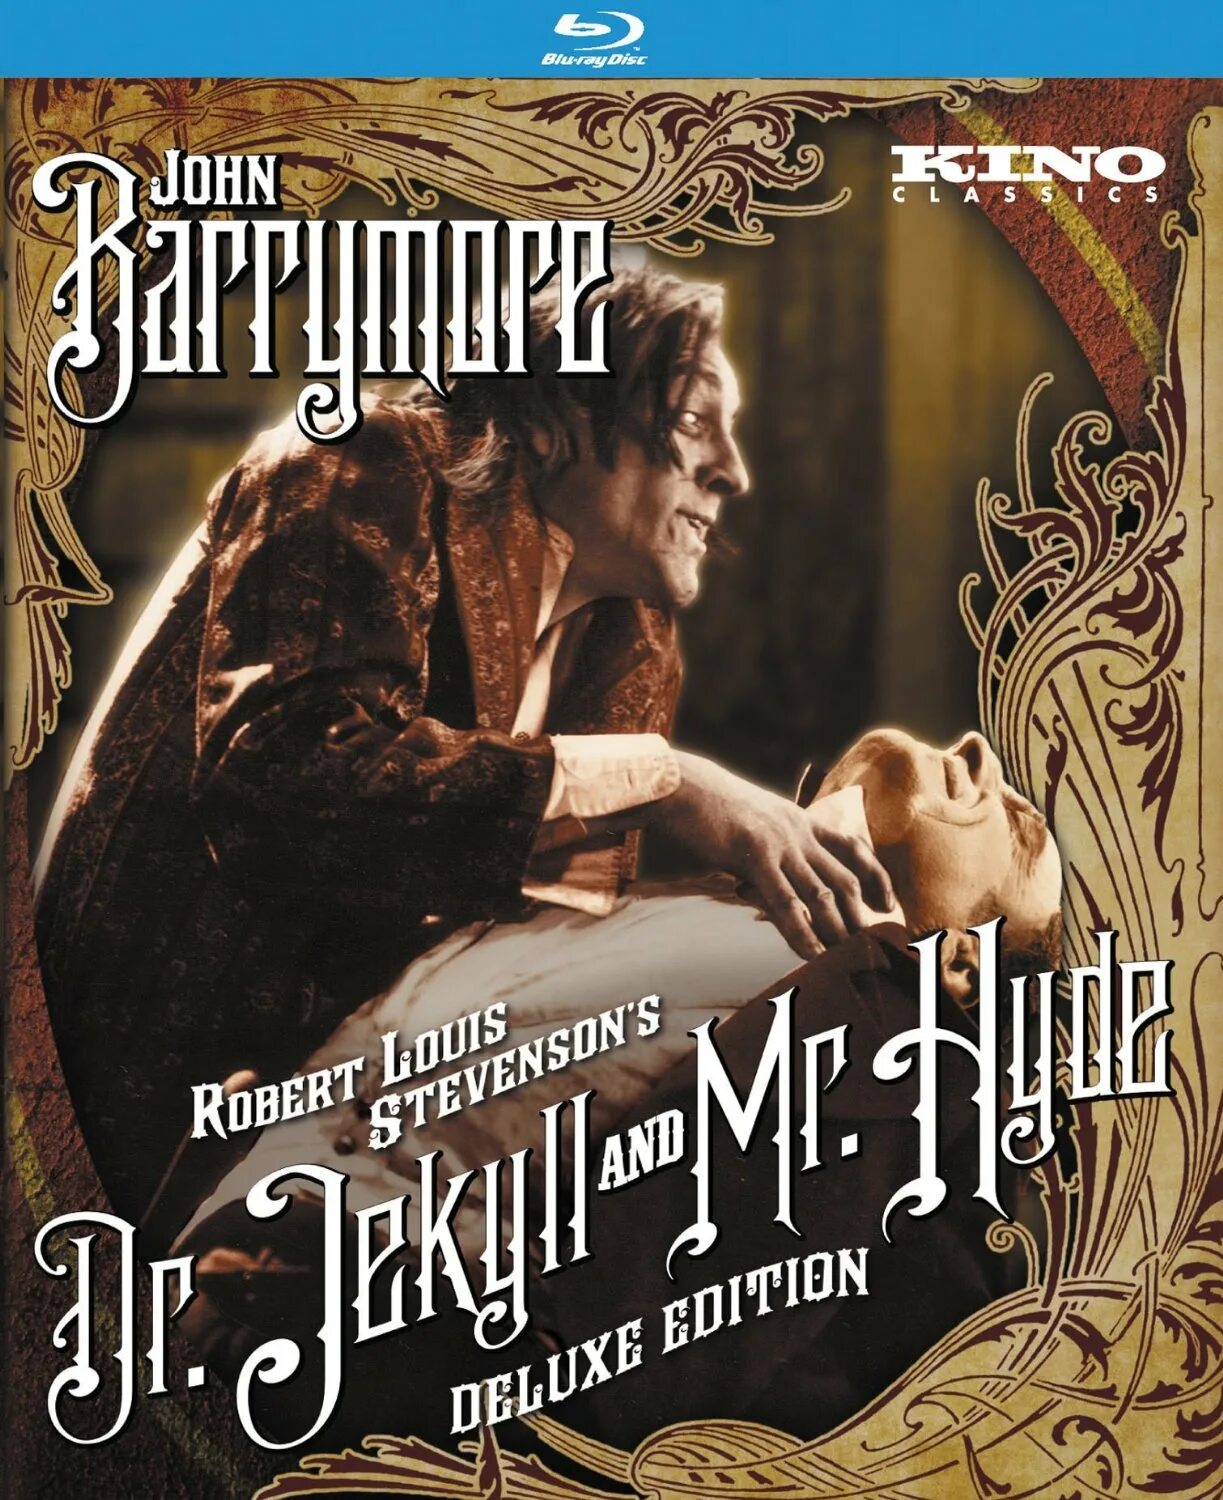 История джекила и хайда. Странная история доктора Джекила. Dr. Jekyll and Mr. Hyde 1920. Доктор Джекилл и Мистер Хайд. История доктора Джекила и мистера Хайда.